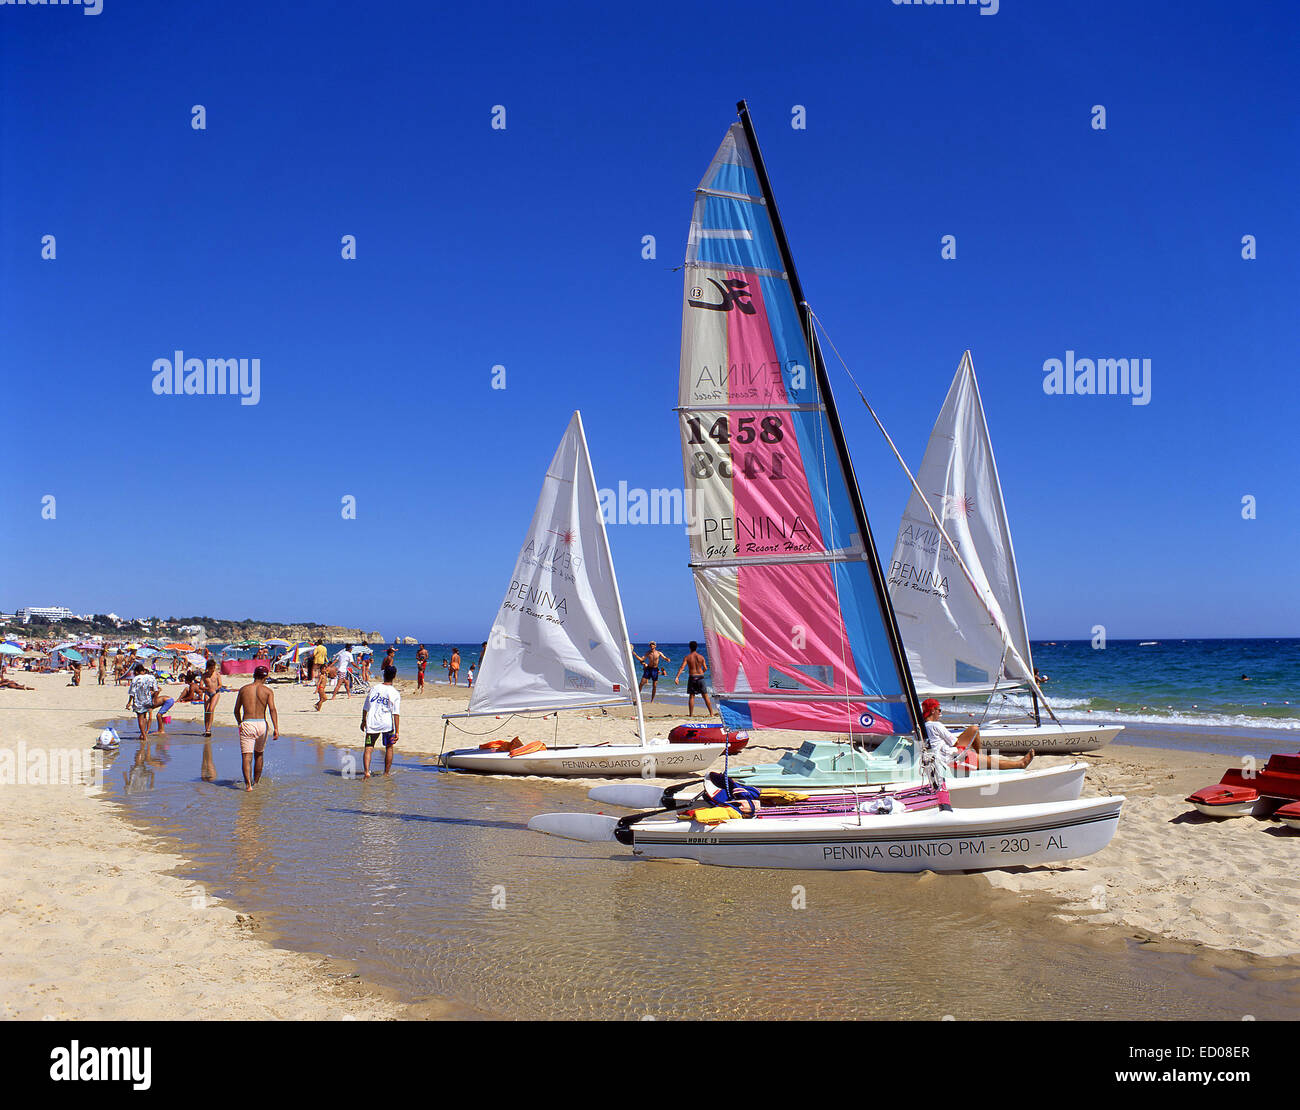 Beachscene, Praia da Rocha, Portimão, Algarve Region, Portugal Stock Photo